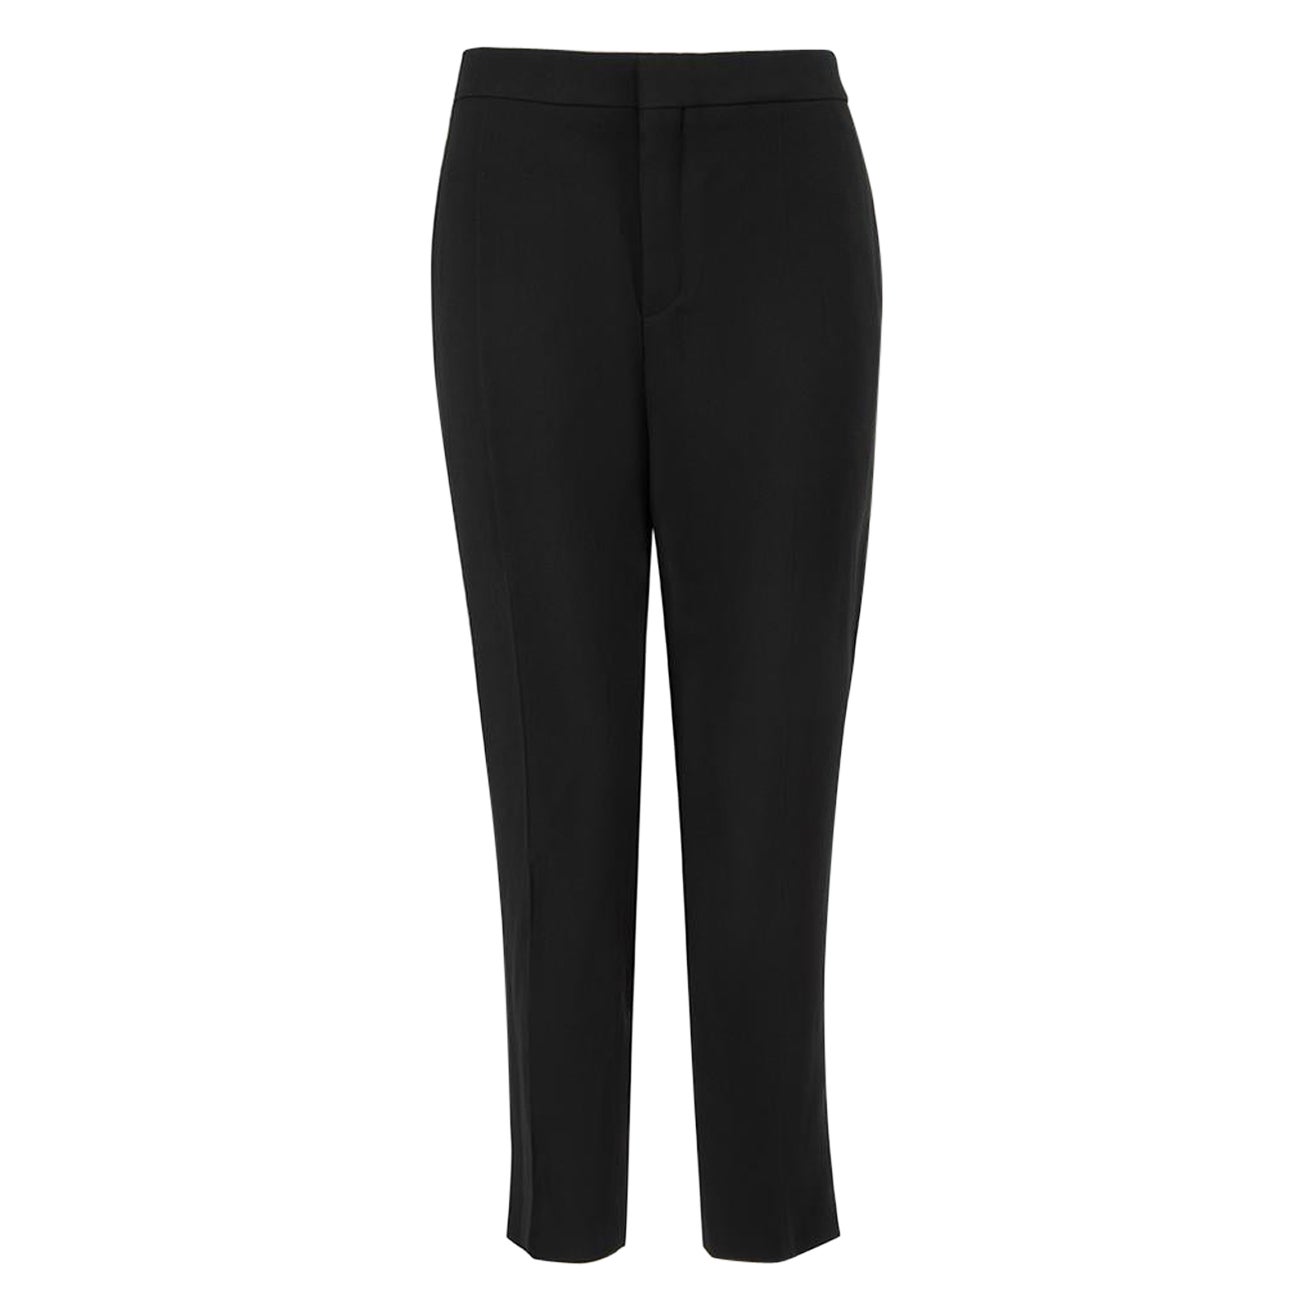 Chloé Pantalon tailoring taille moyenne noir Taille L en vente